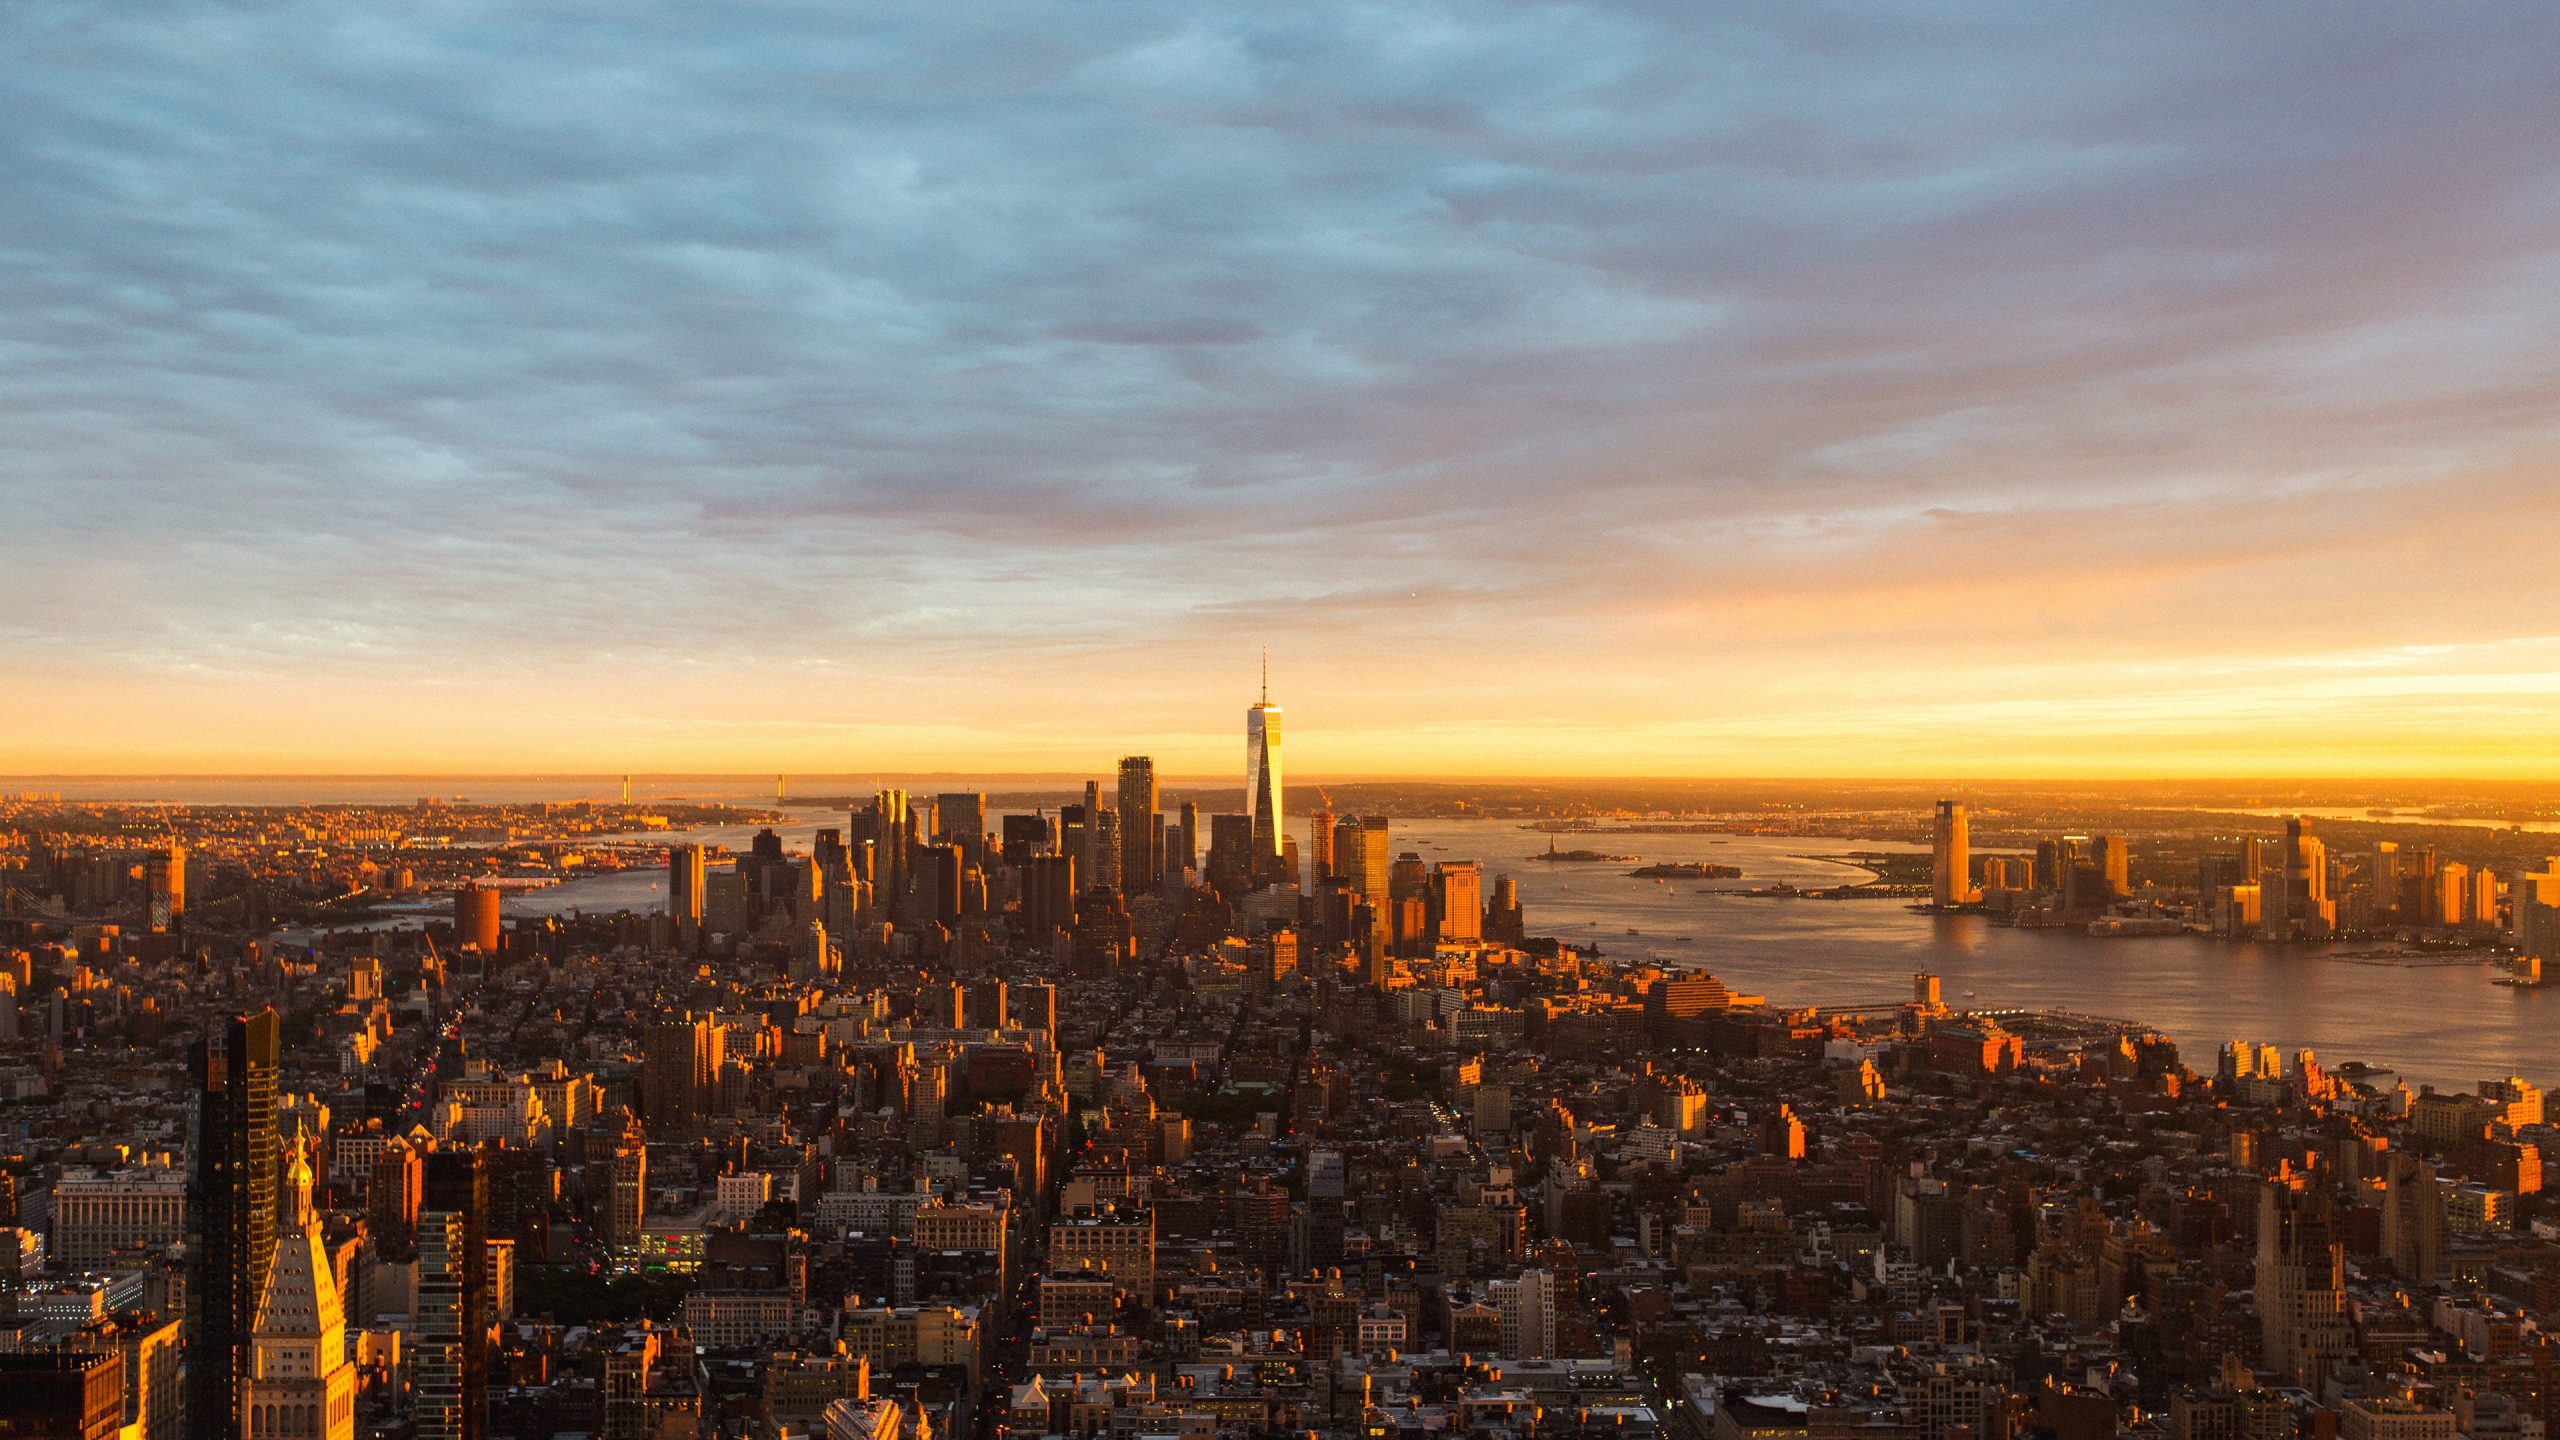 New York Iconic sunrise sunrise johannes-hurtig-z-fpG7D7buk-unsplash